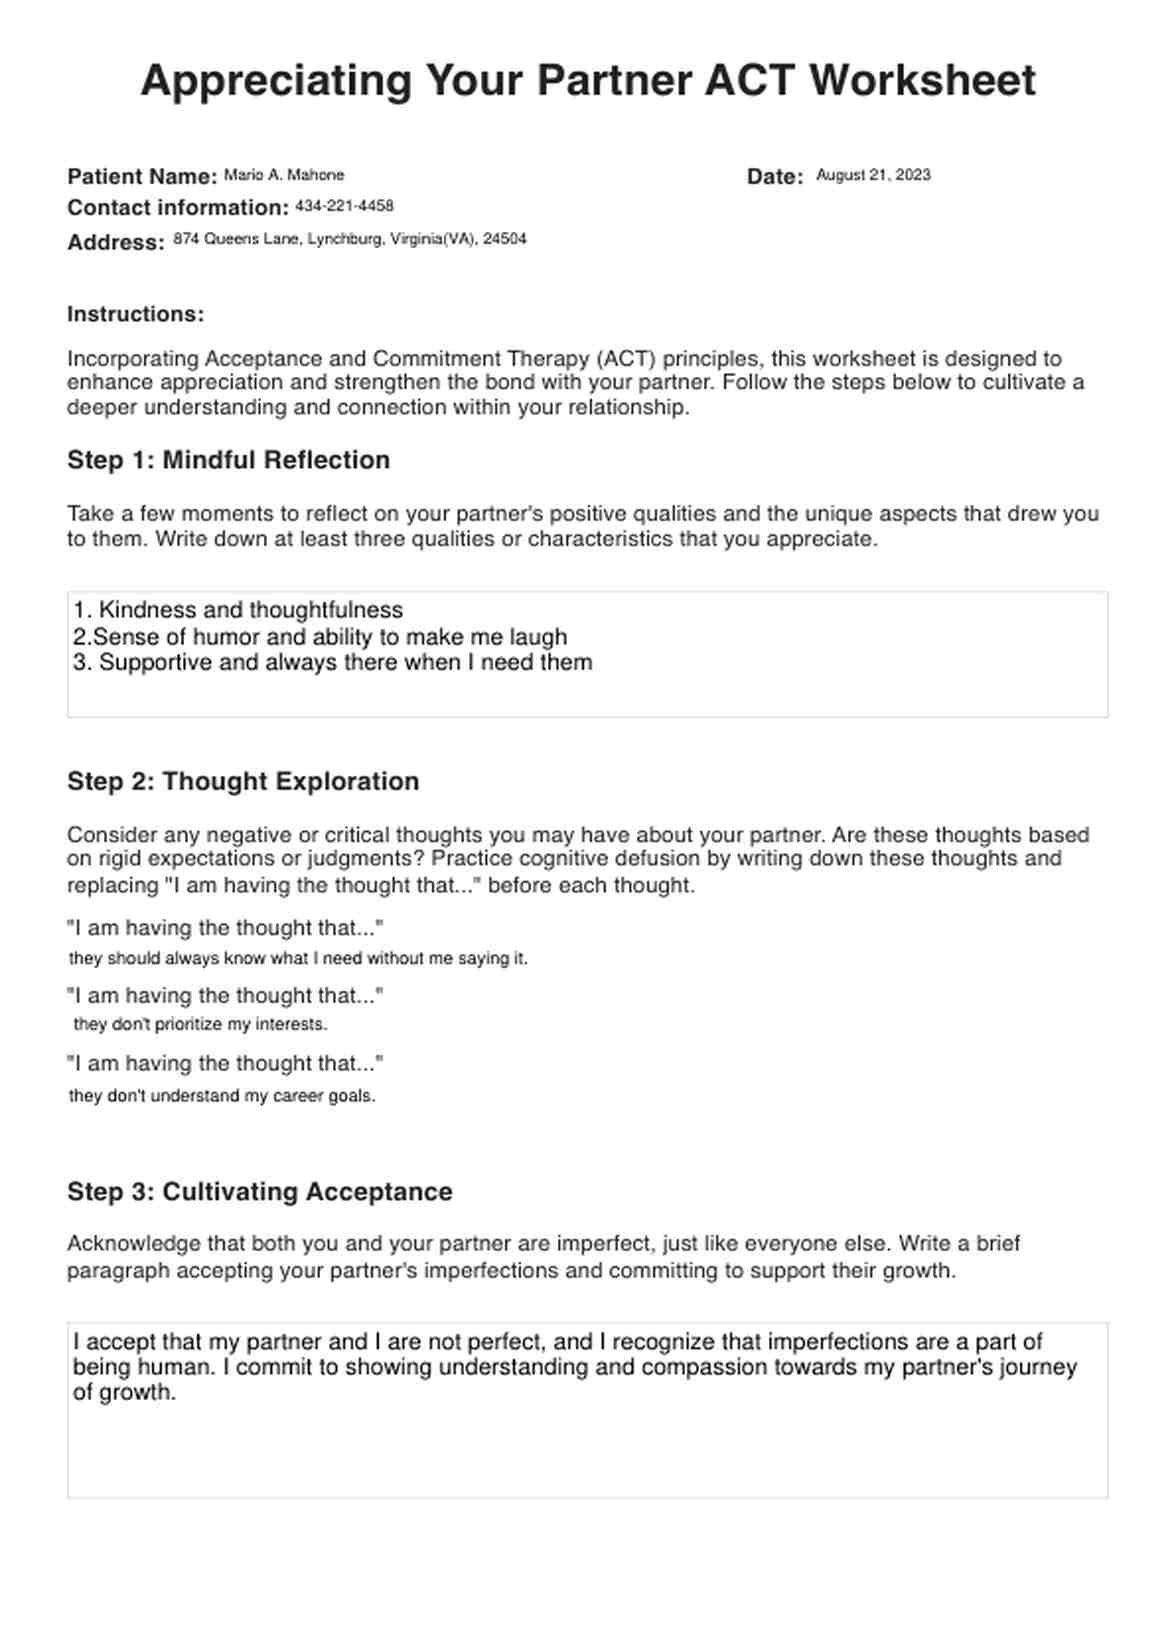 Appreciating Your Partner ACT Worksheet PDF Example